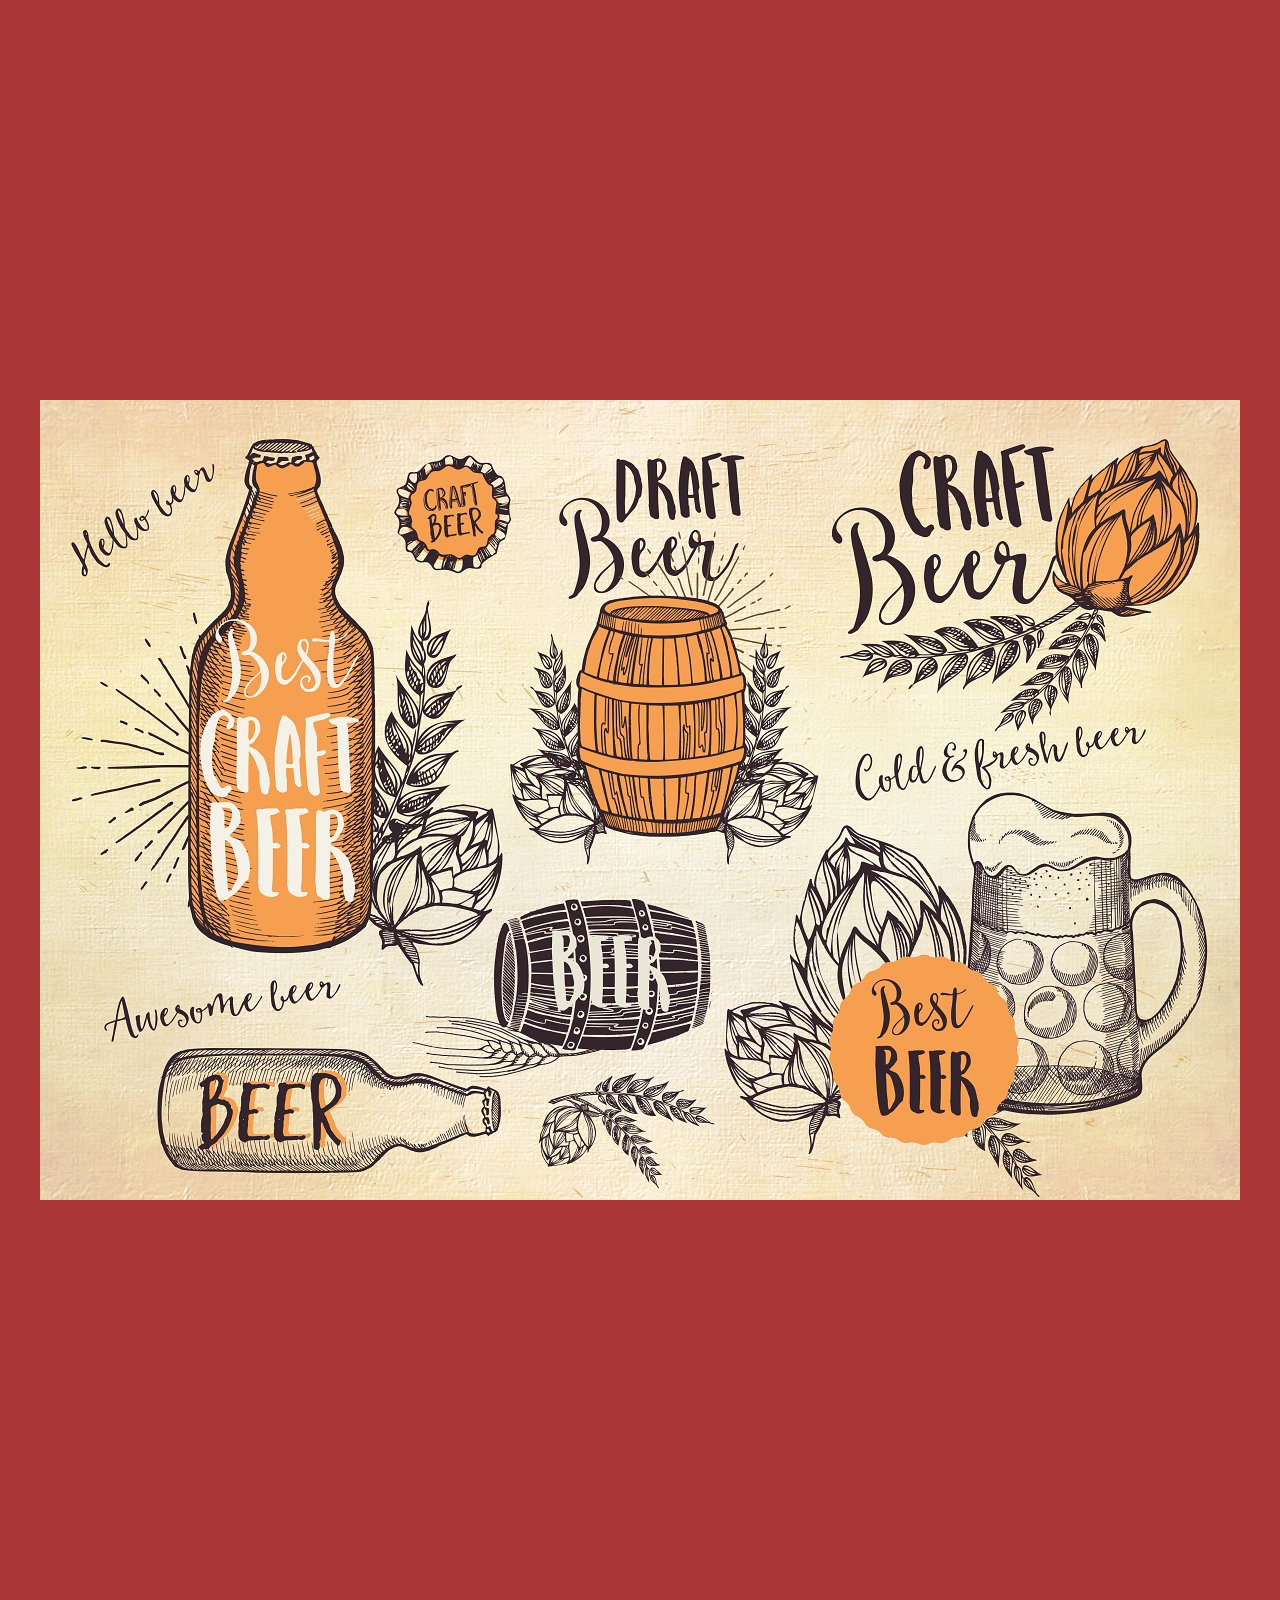 Beer doodle elements pinterest image.